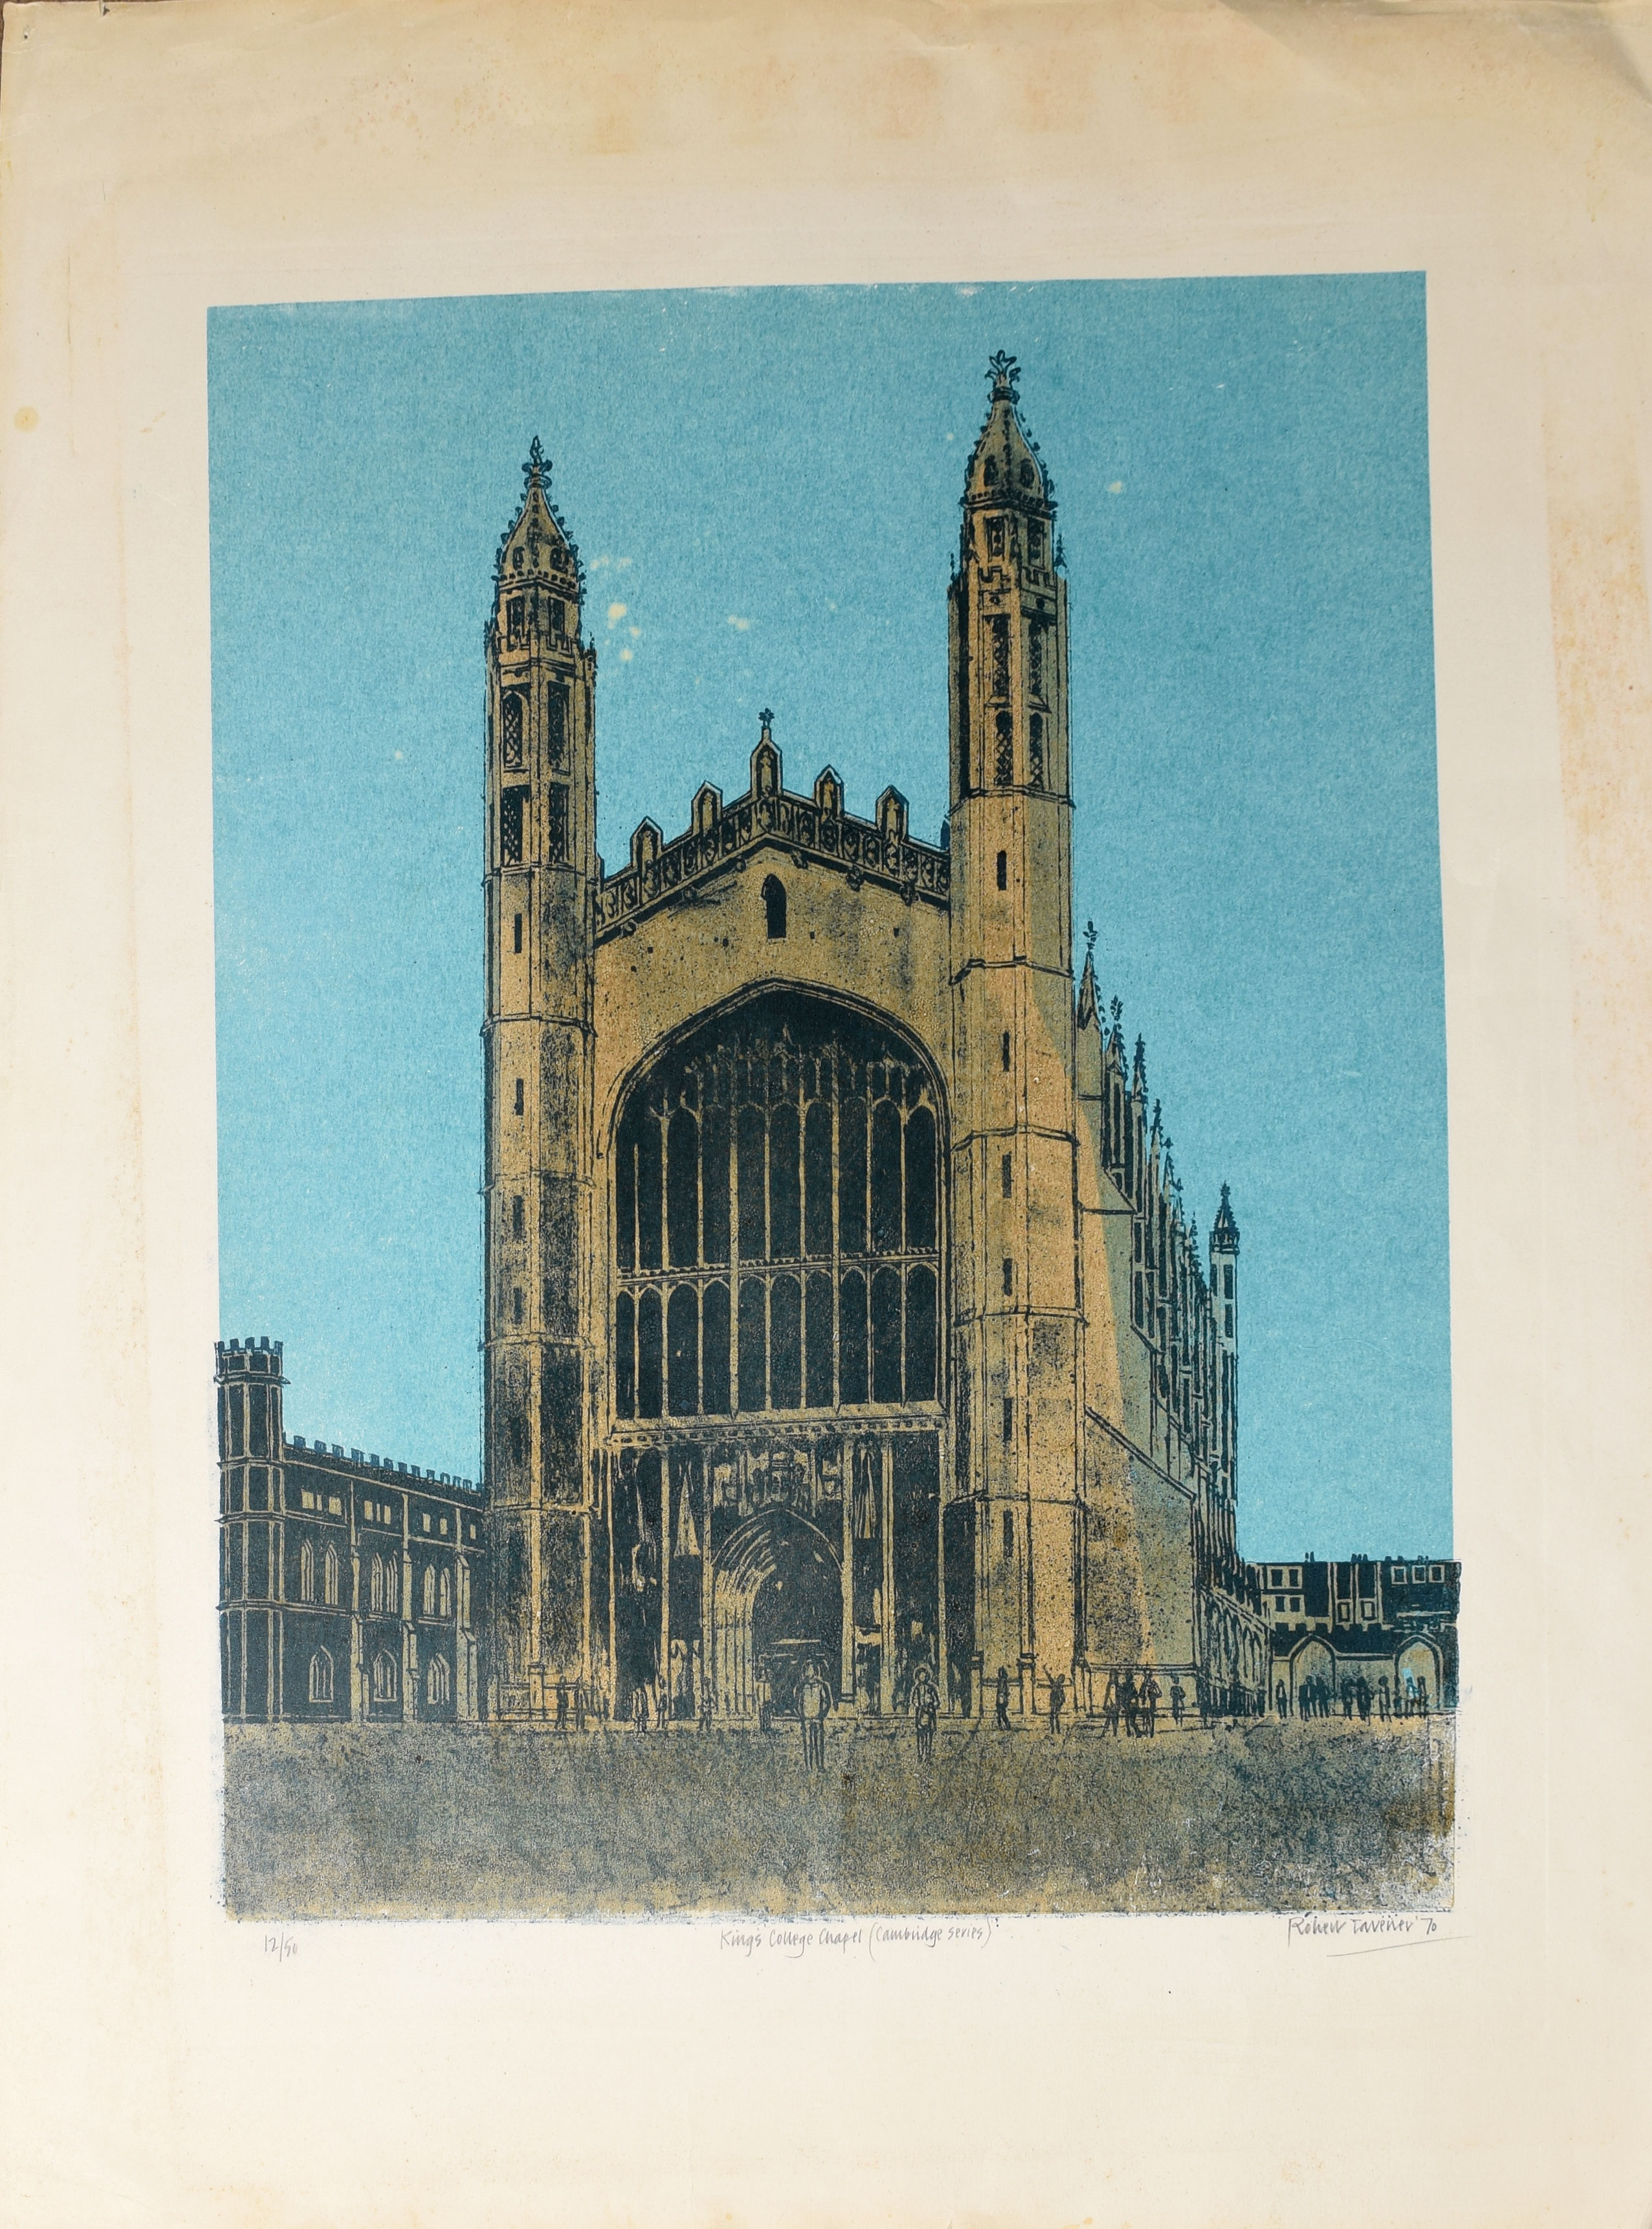 •Robert Tavener (1920-2004), "King's College Chapel (Cambridge Series)", screen print, signed, dated